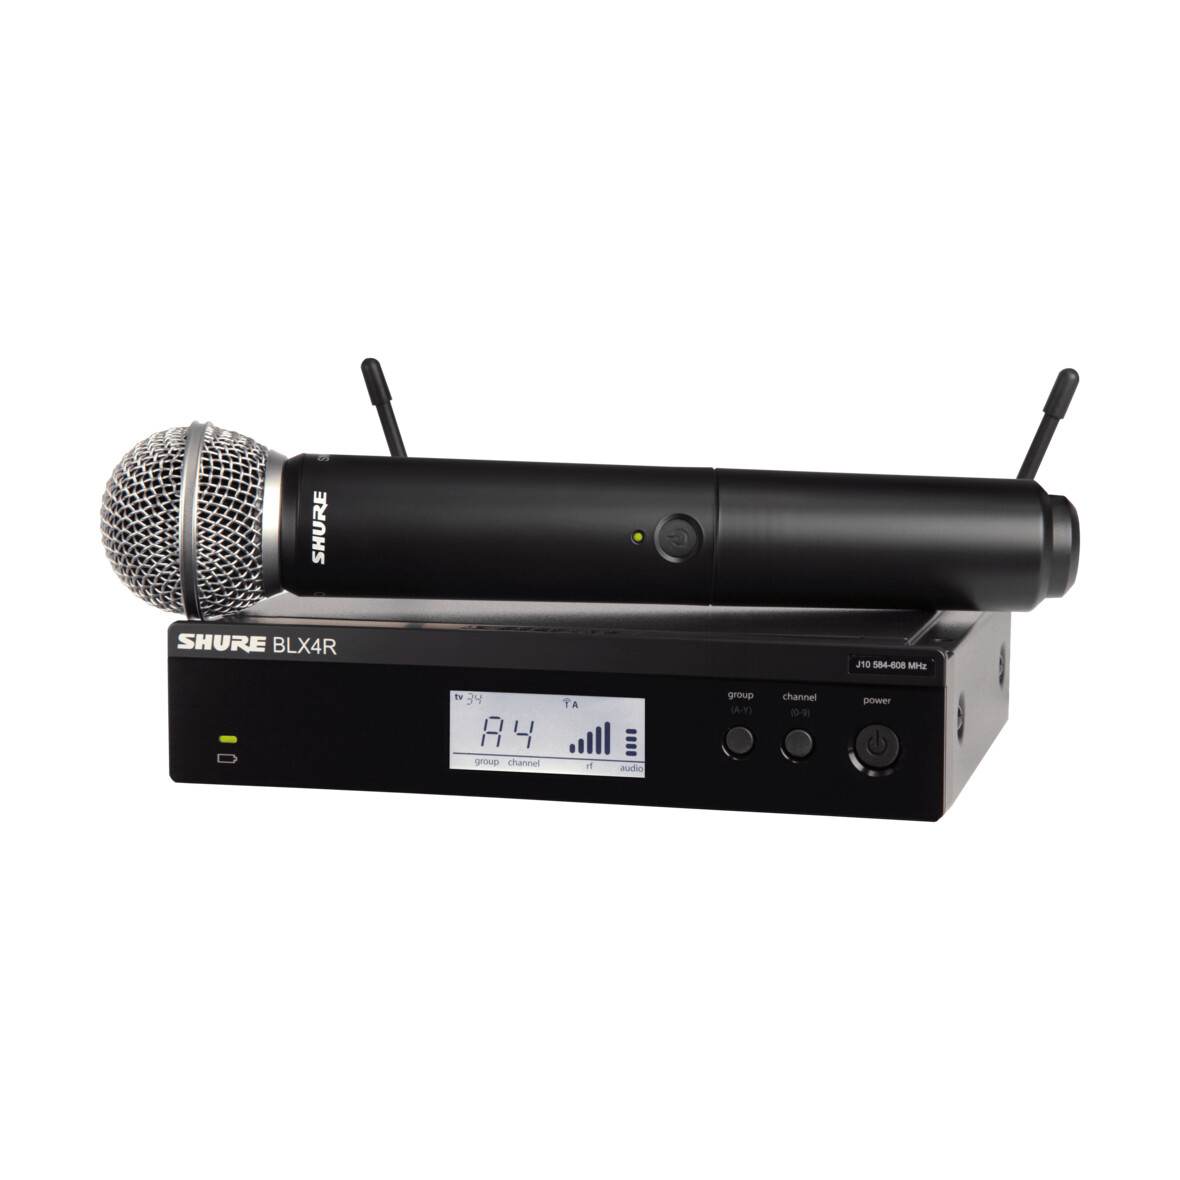 Shure-BLX24R-SM58-Draadloos-Systeem-met-SM58-Microfoon-en-Rack-Receiver-614-638-MHz-K14